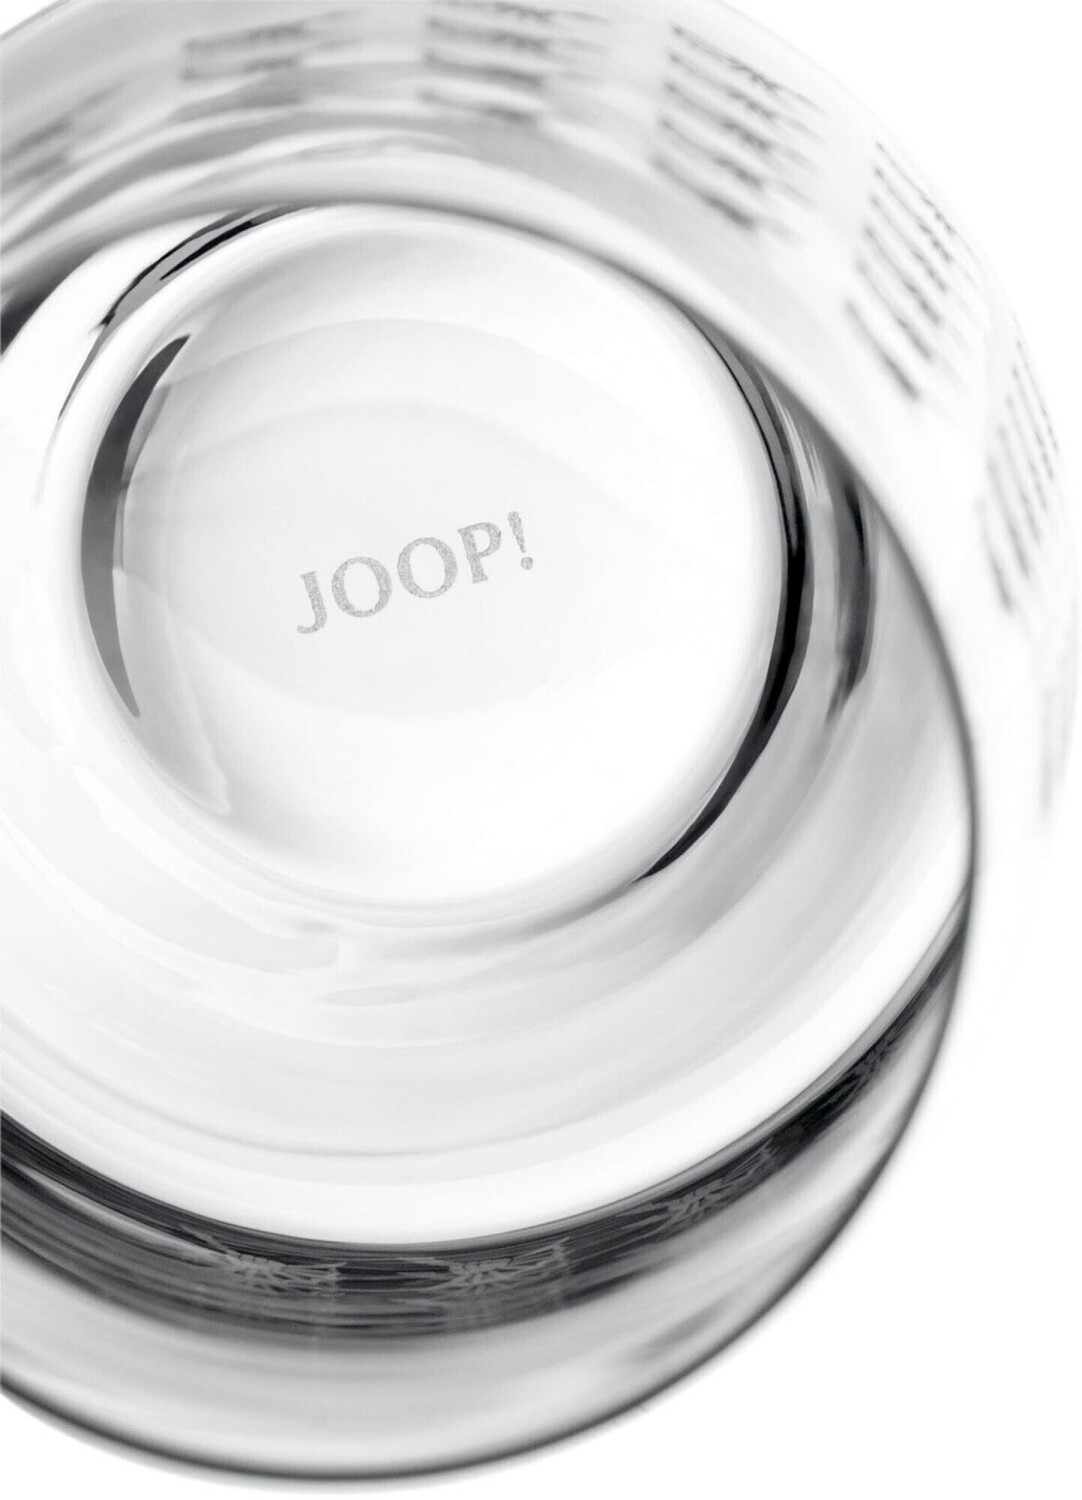 2tlg. Transparent Joop! | Gläserset Cornflower bei € Glas Preisvergleich ab 22,99 Faded